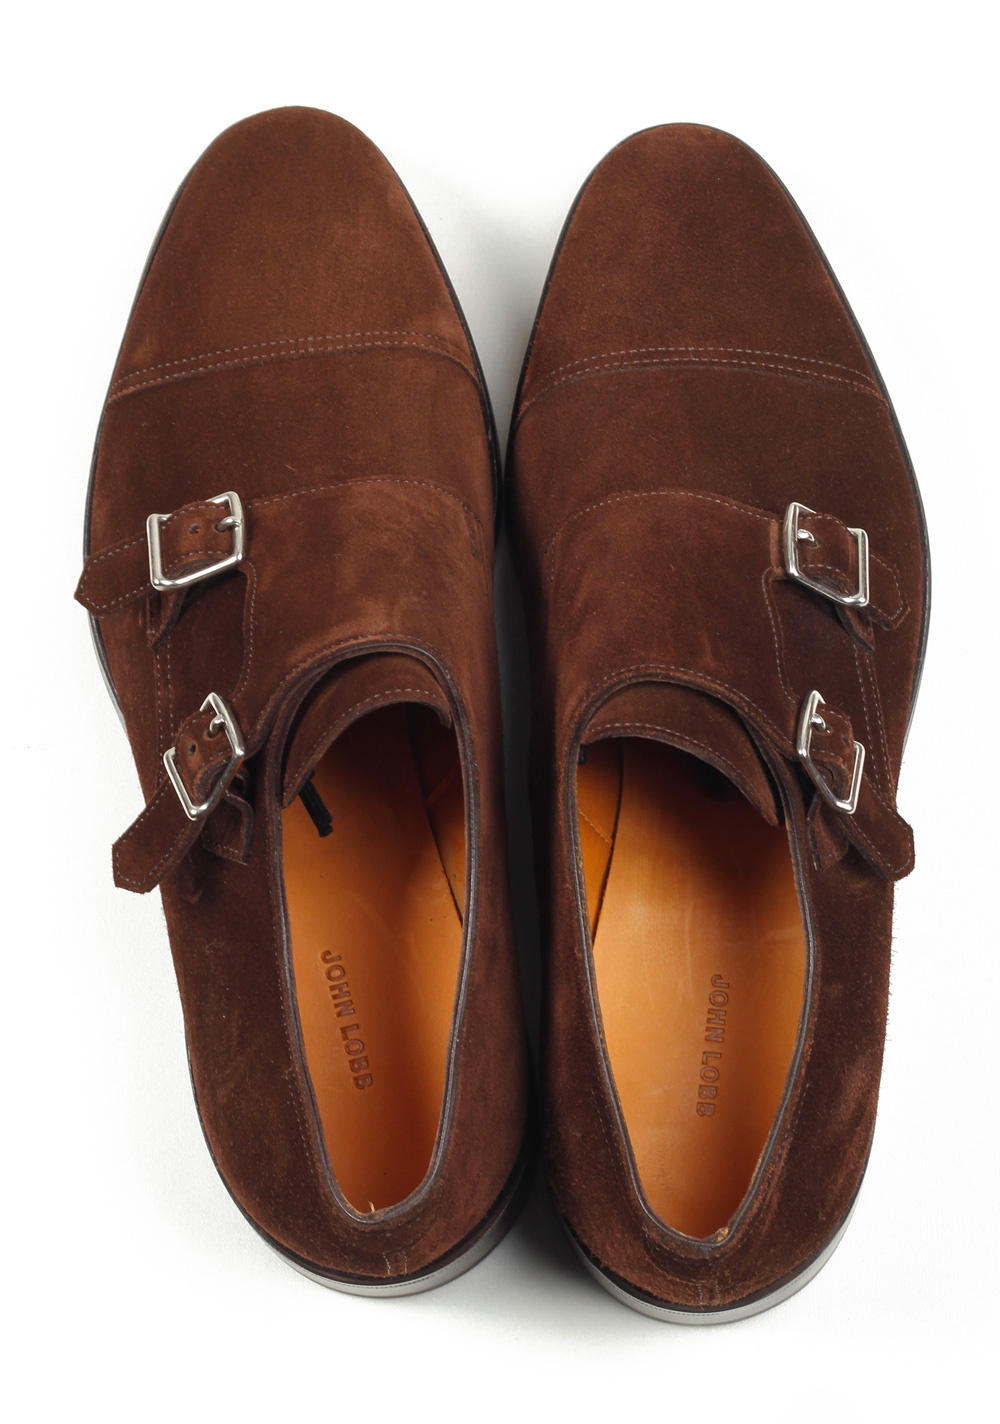 John Lobb William Brown Double Monk Strap Shoes Size 7,5 UK / 8,5 U.S ...